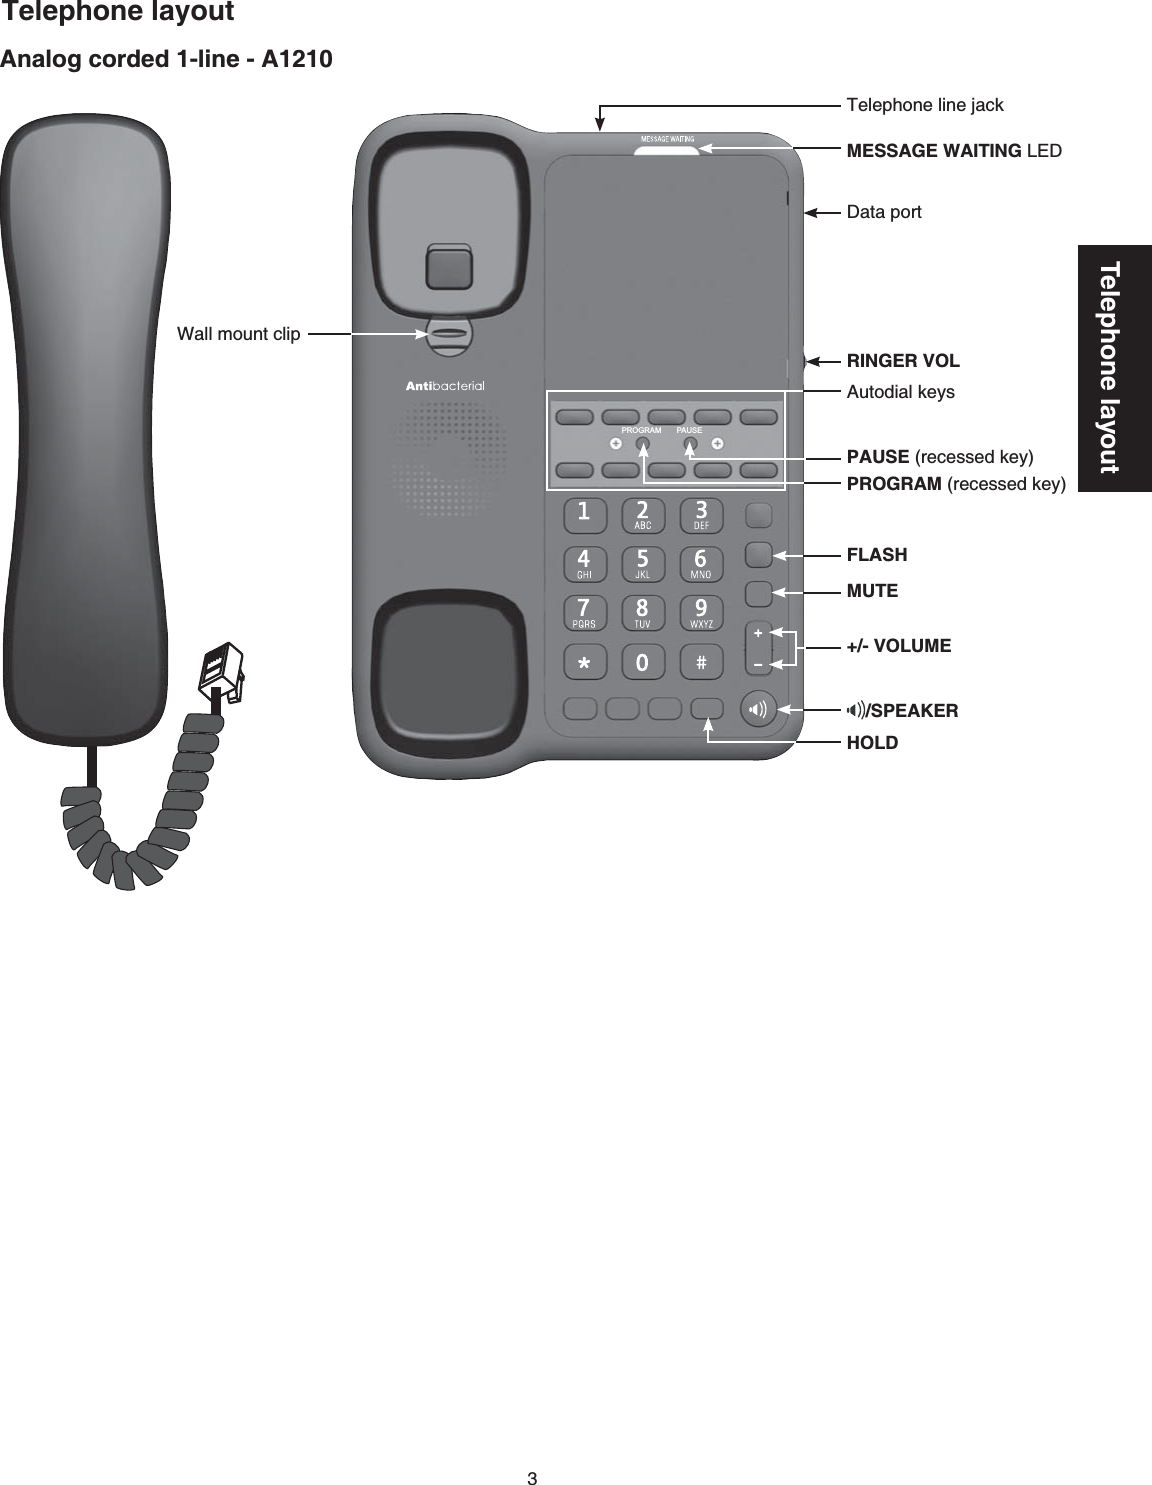 3Telephone layoutTelephone layoutAnalog corded 1-line - A1210PROGRAM PAUSE+/- VOLUMEMUTEFLASHPROGRAM (recessed key)PAUSE (recessed key)Autodial keys&amp;CVCRQTVMESSAGE WAITING.&apos;&amp;Telephone line jackWall mount clipRINGER VOLHOLD/SPEAKER